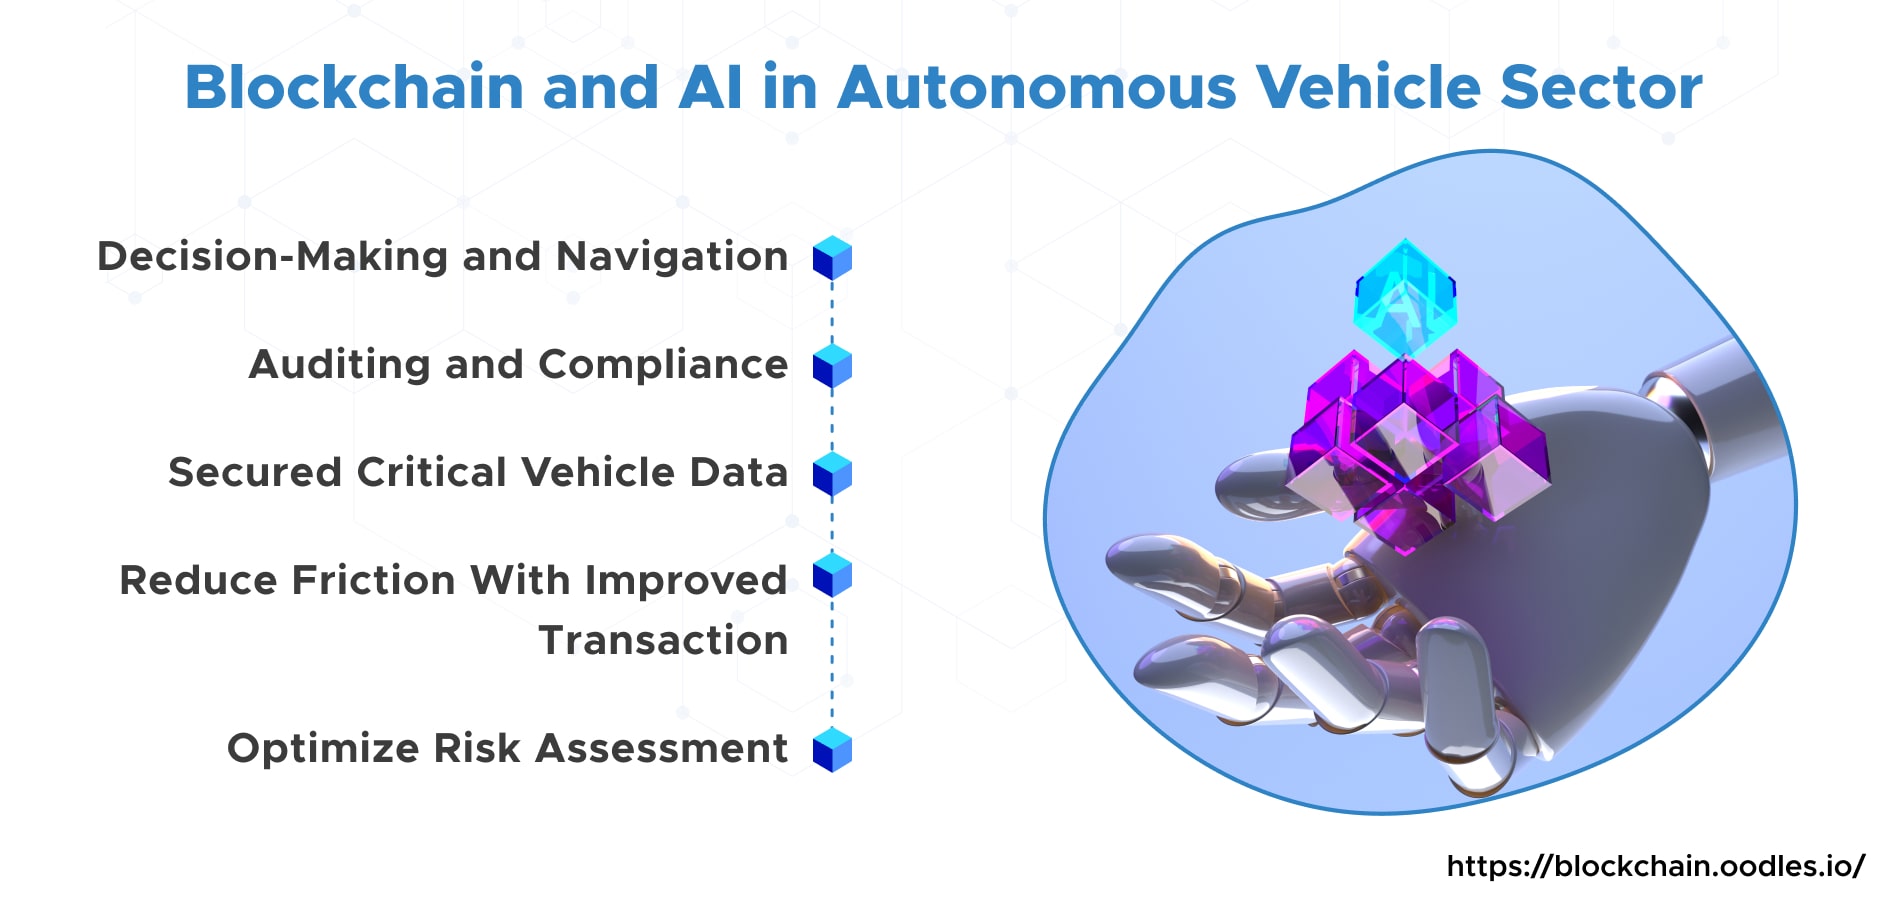 Blockchain and AI in Autonomous Vehicle Sector